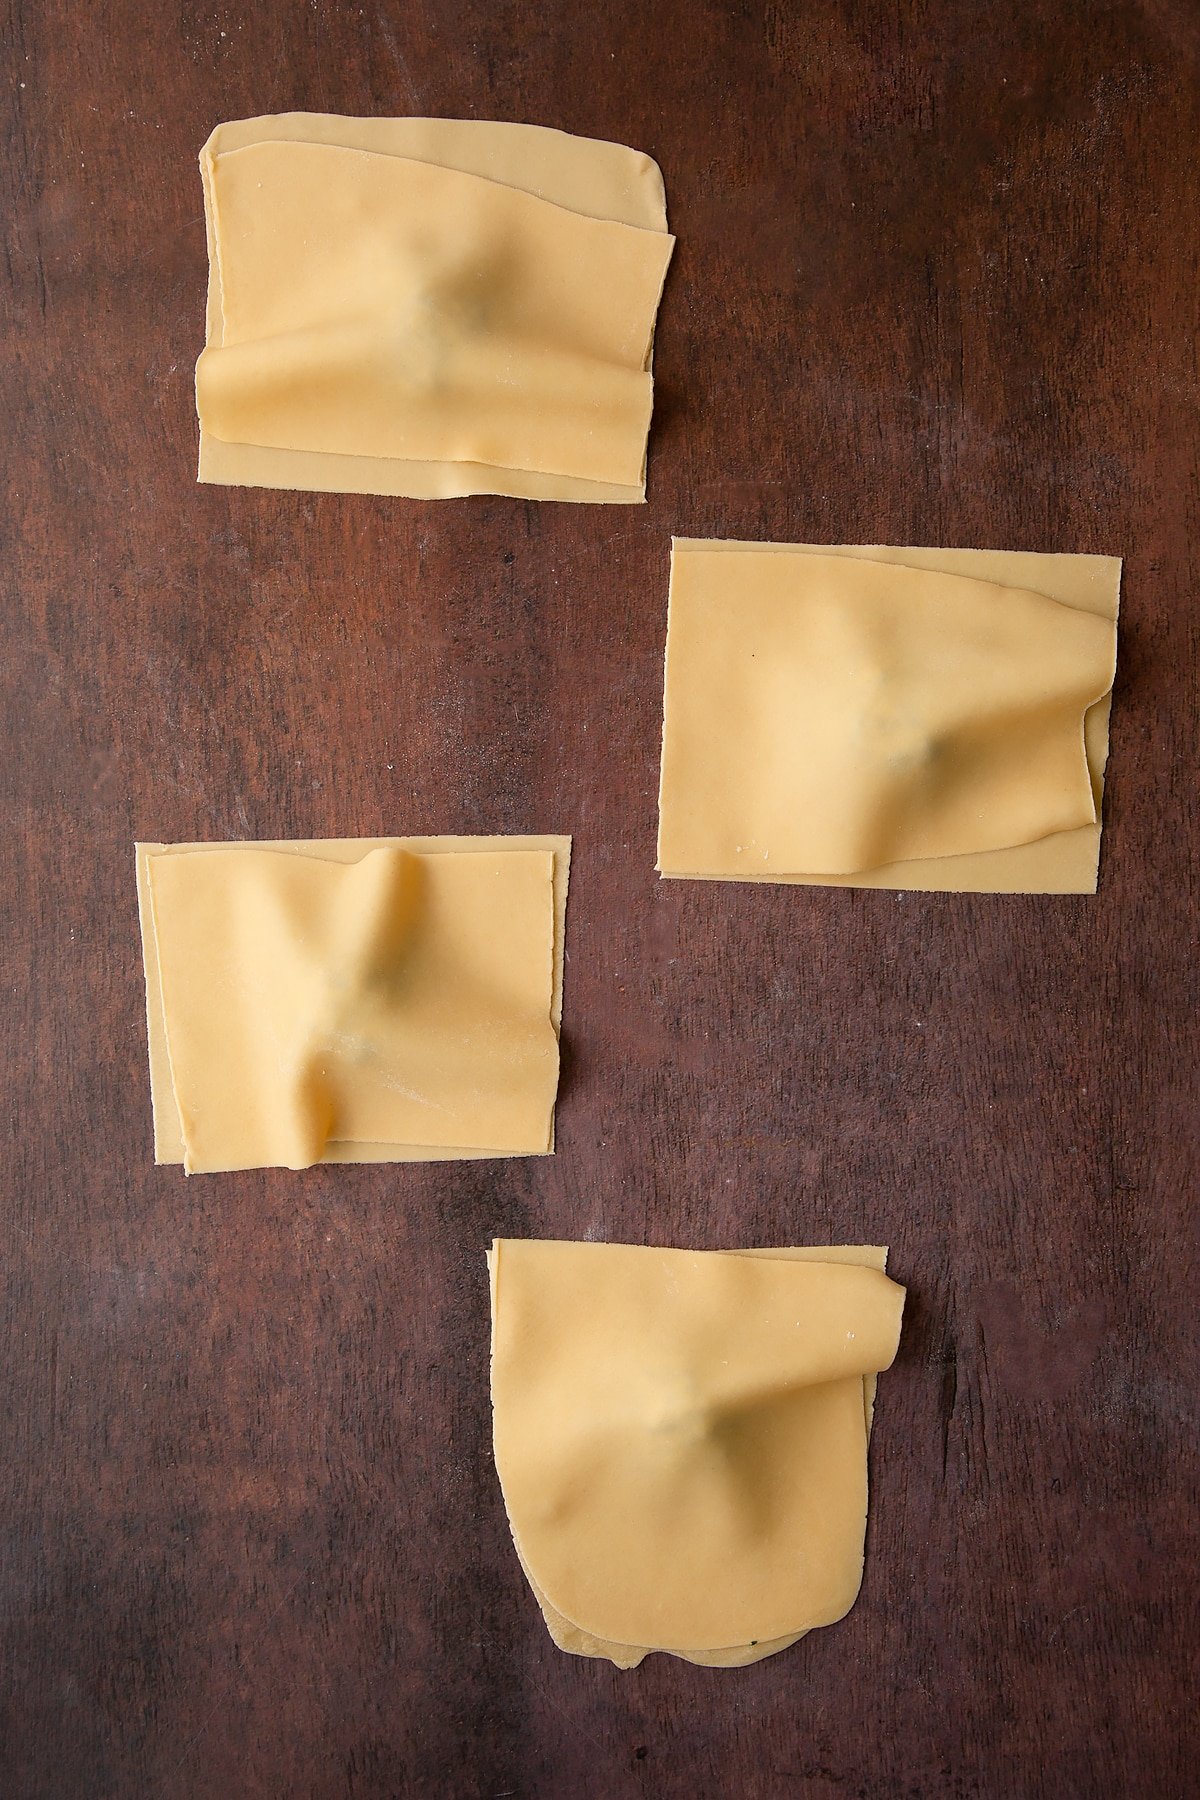 Folding the pasta sheet onto the ricotta mixture.